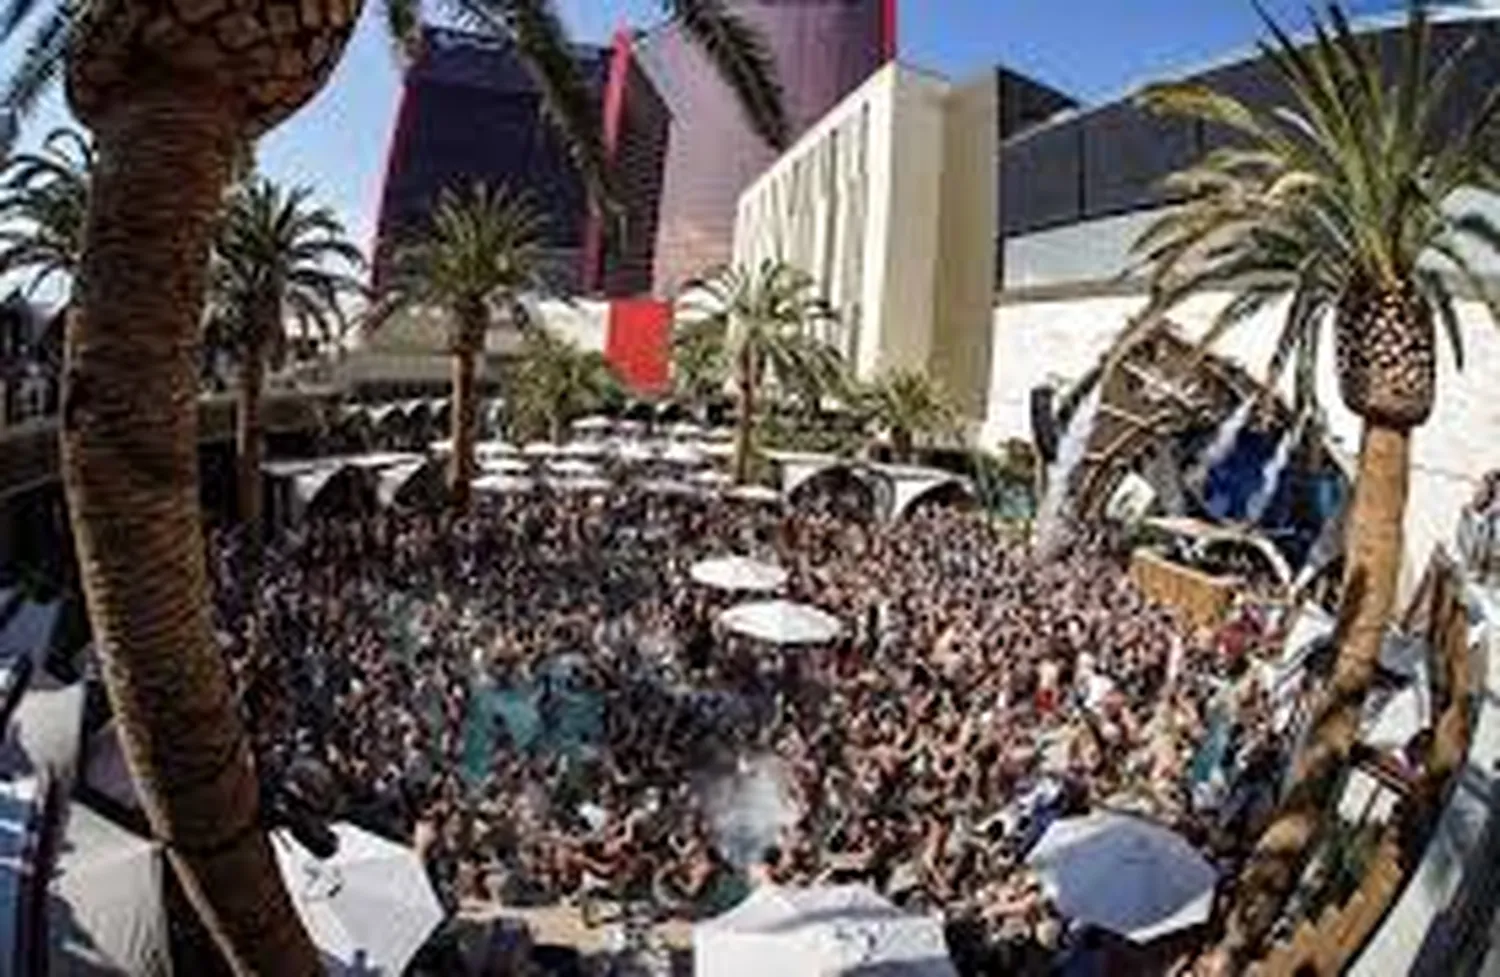 Ayu pool party Las Vegas